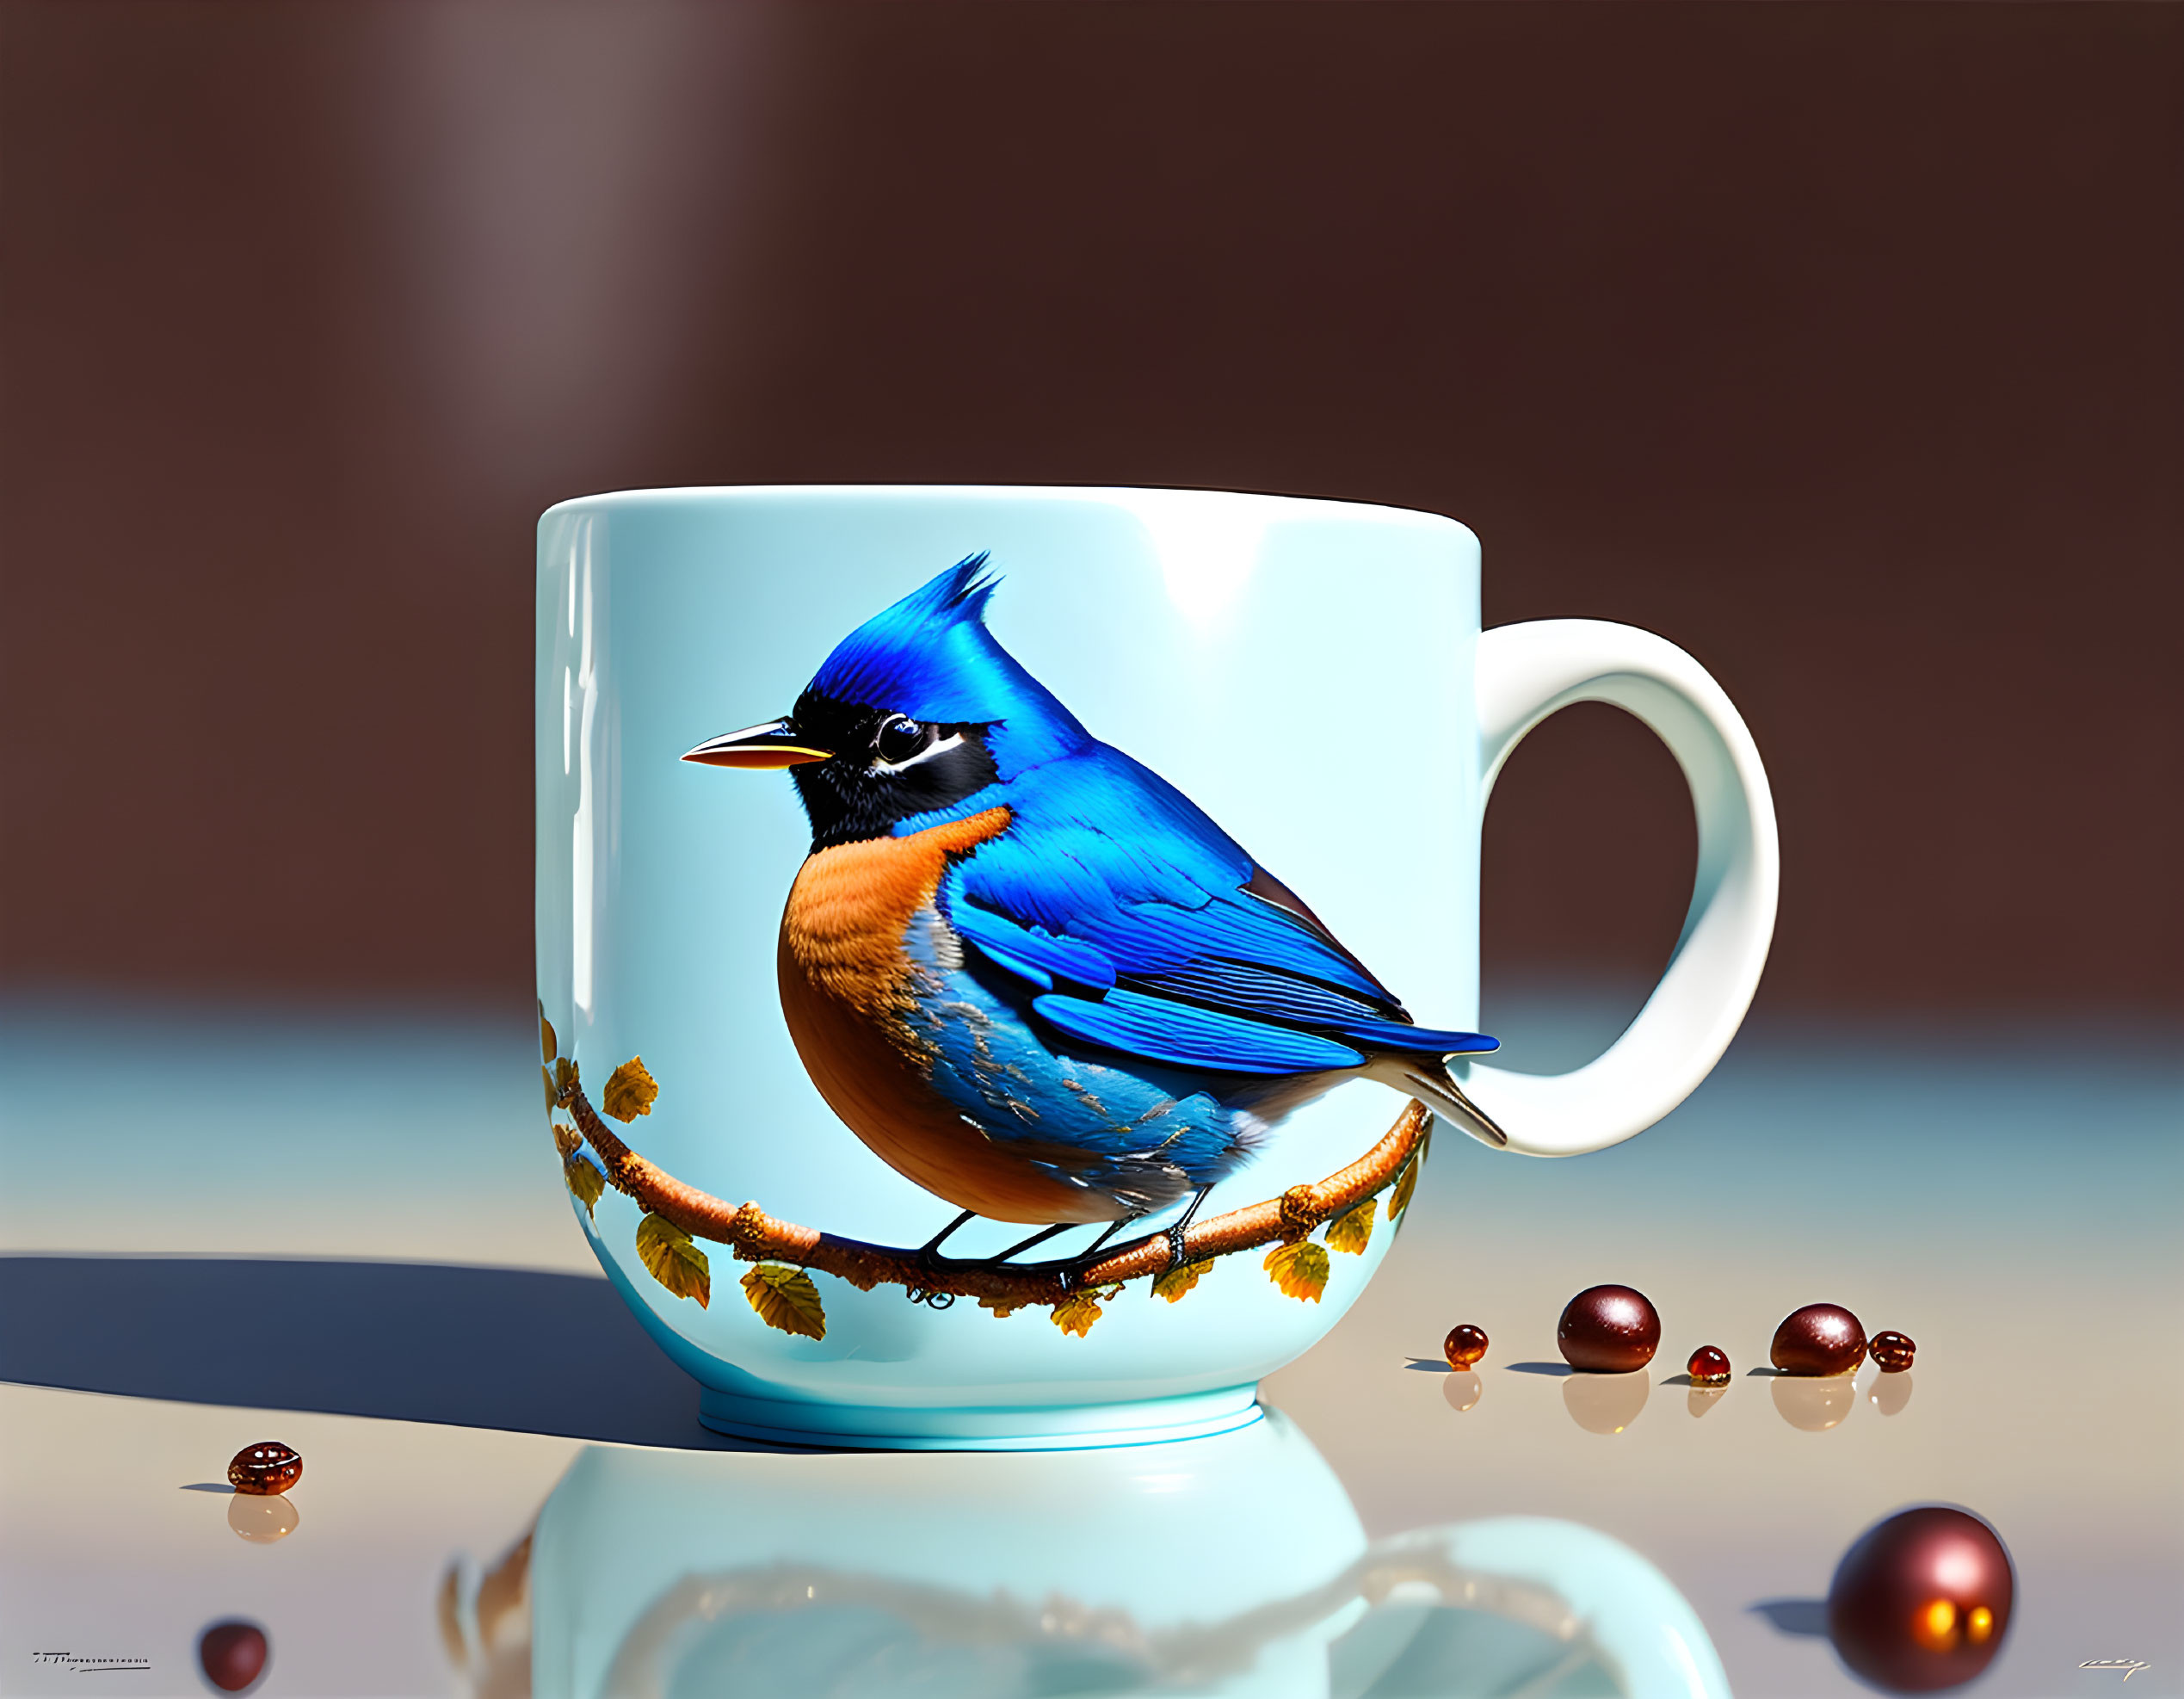 blue breasted robin as an ornament on a coffee mug